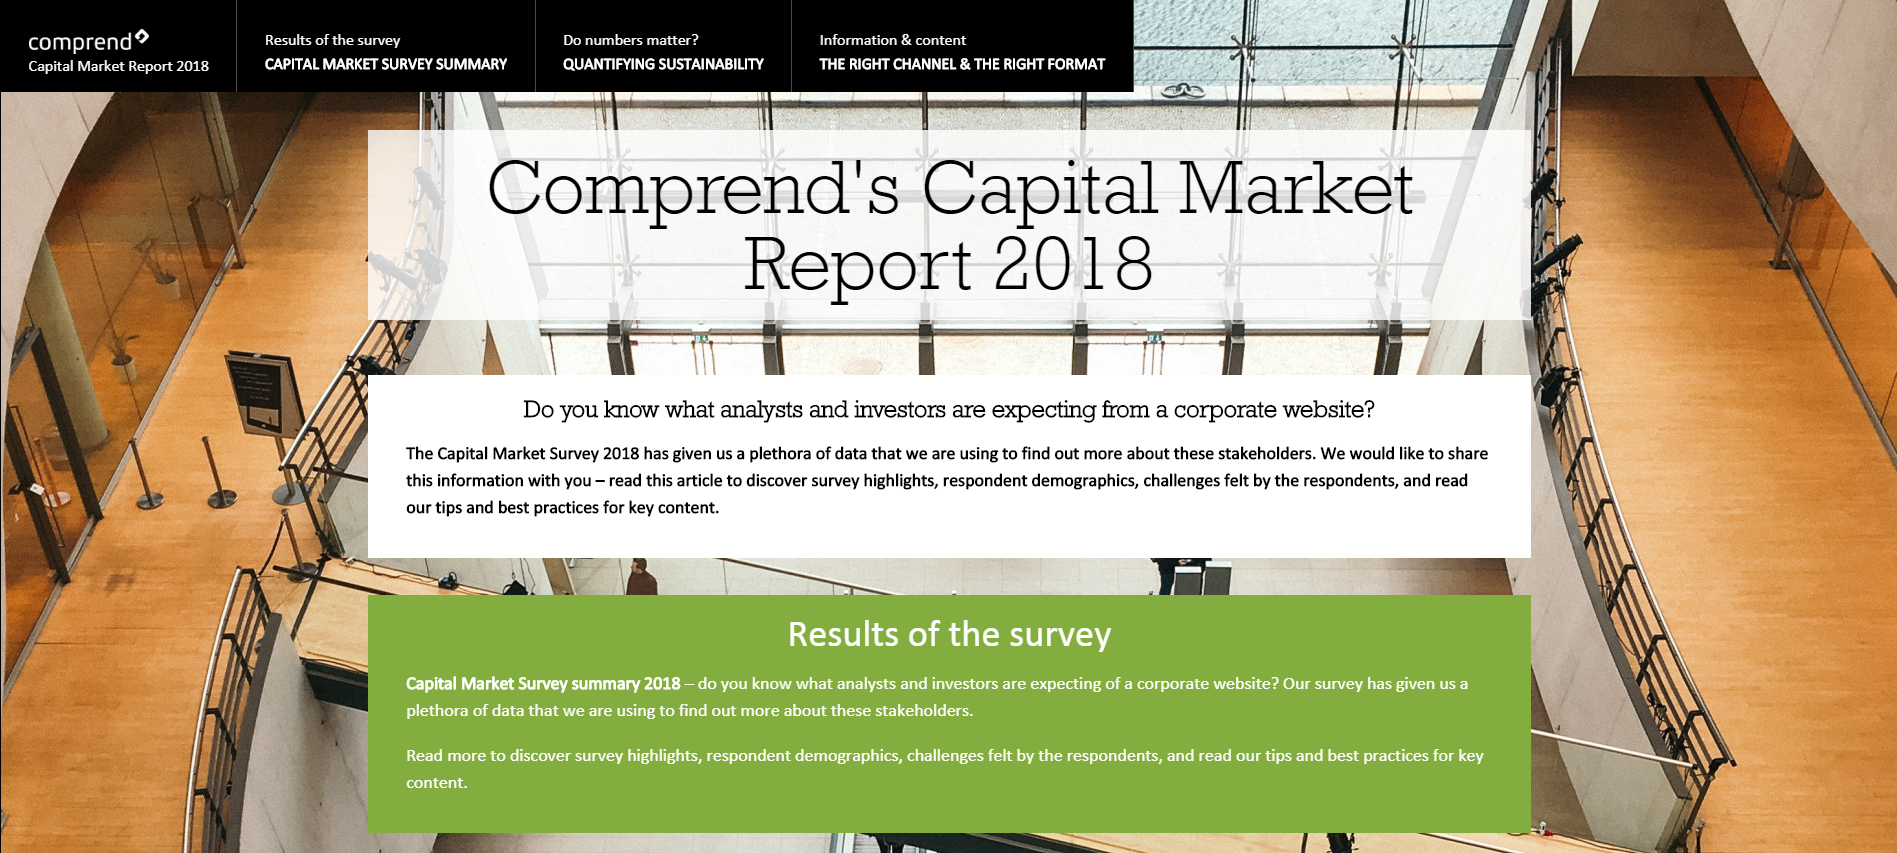 Screenshot of the Capital Market Report 2018